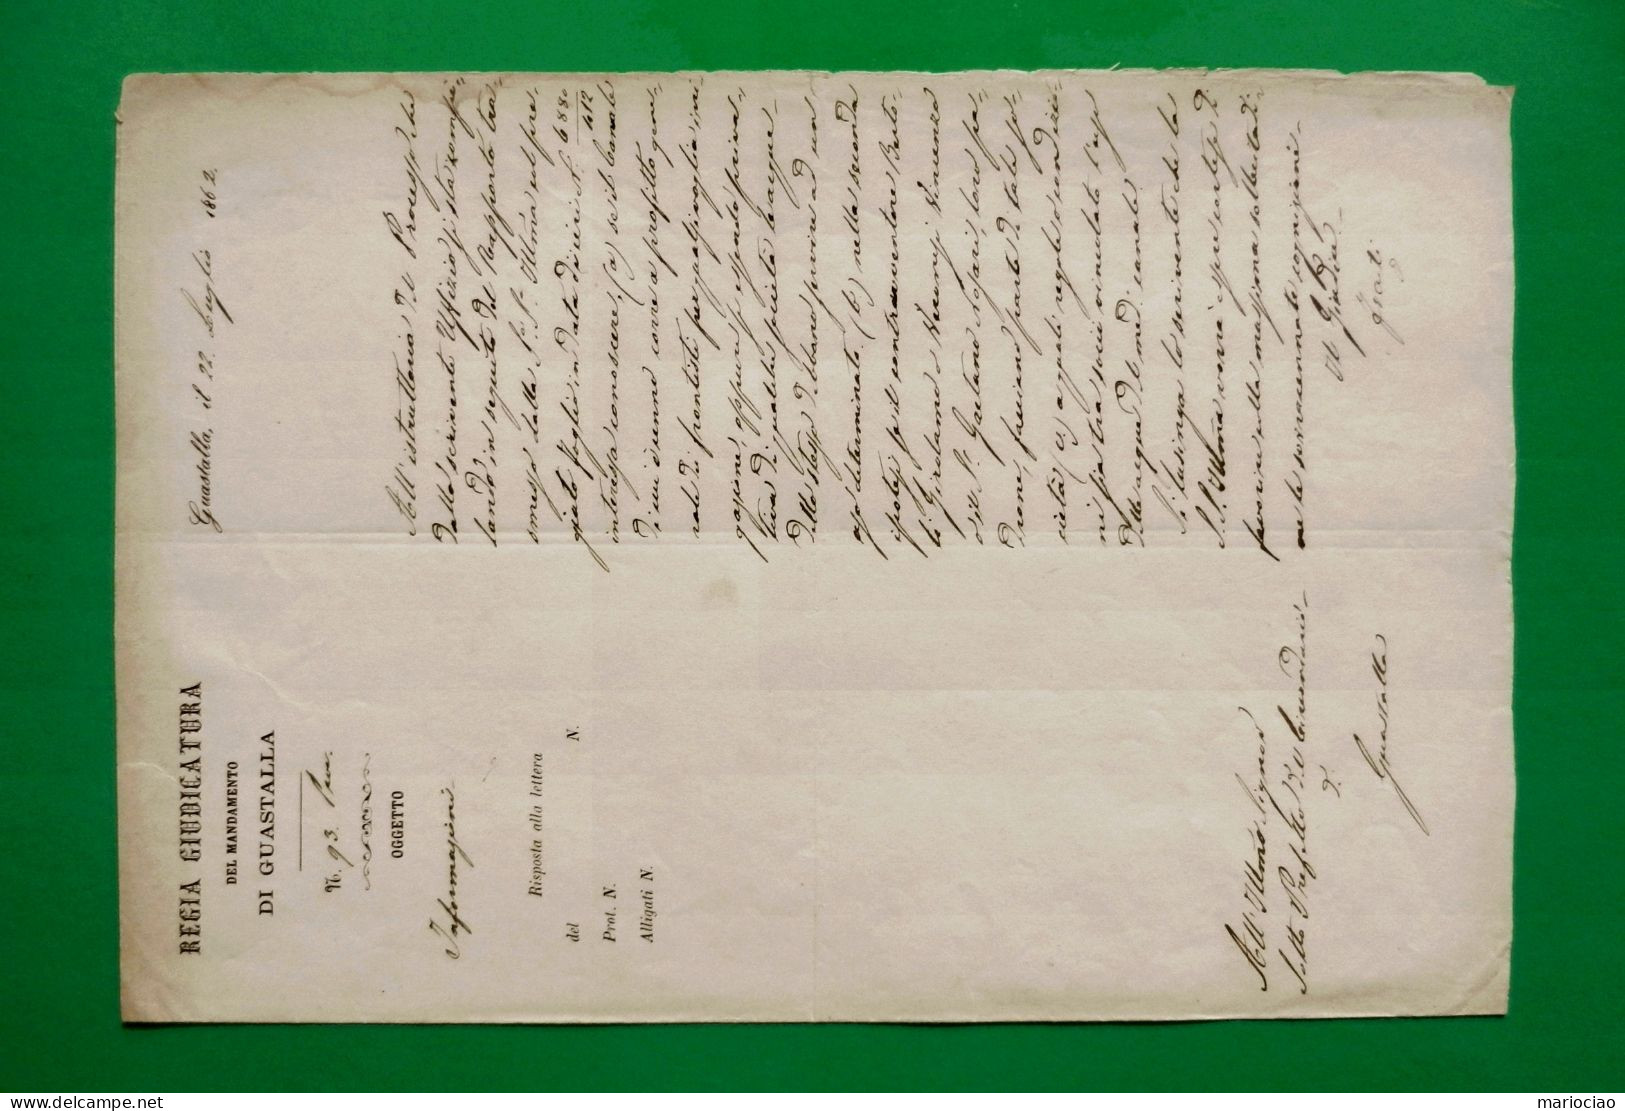 D-IT Guastalla 1862 - Regia Giudicataria Di Guastalla - Historische Documenten